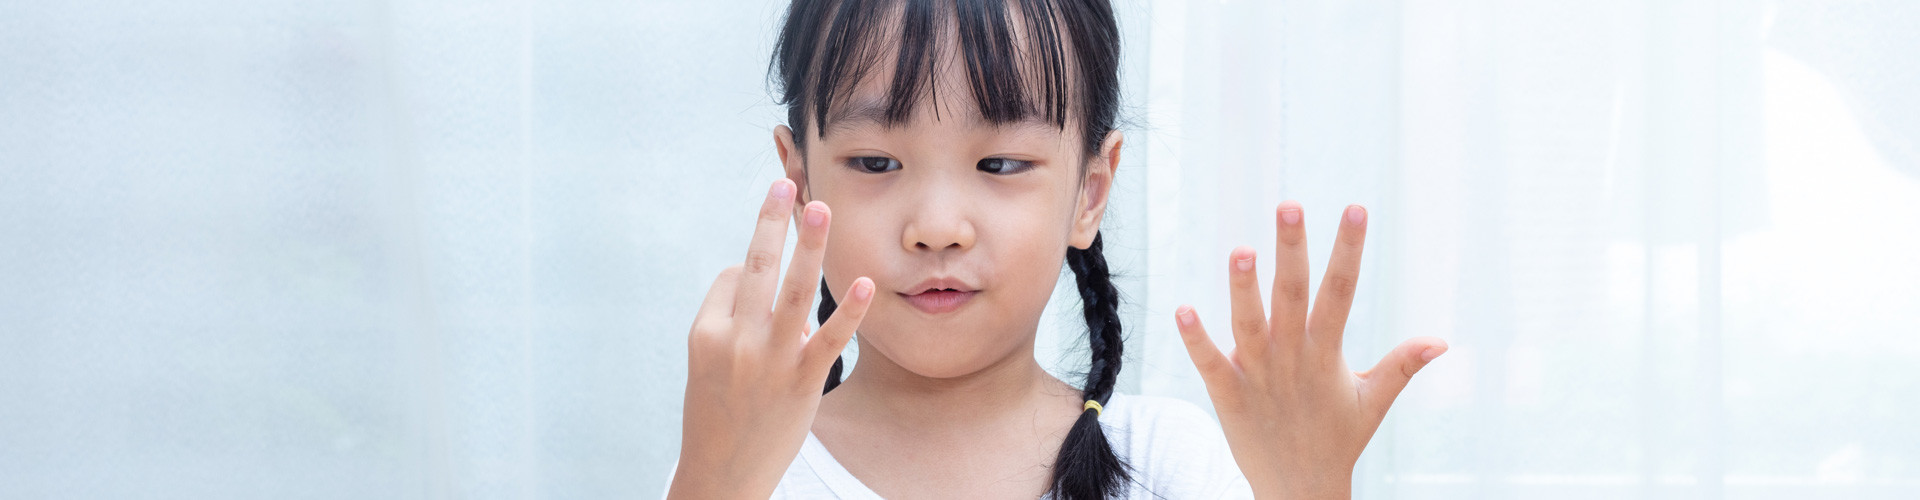 Ein Kind rechnet mit den Fingern © Adobe Stock, Tan Kian Khoon